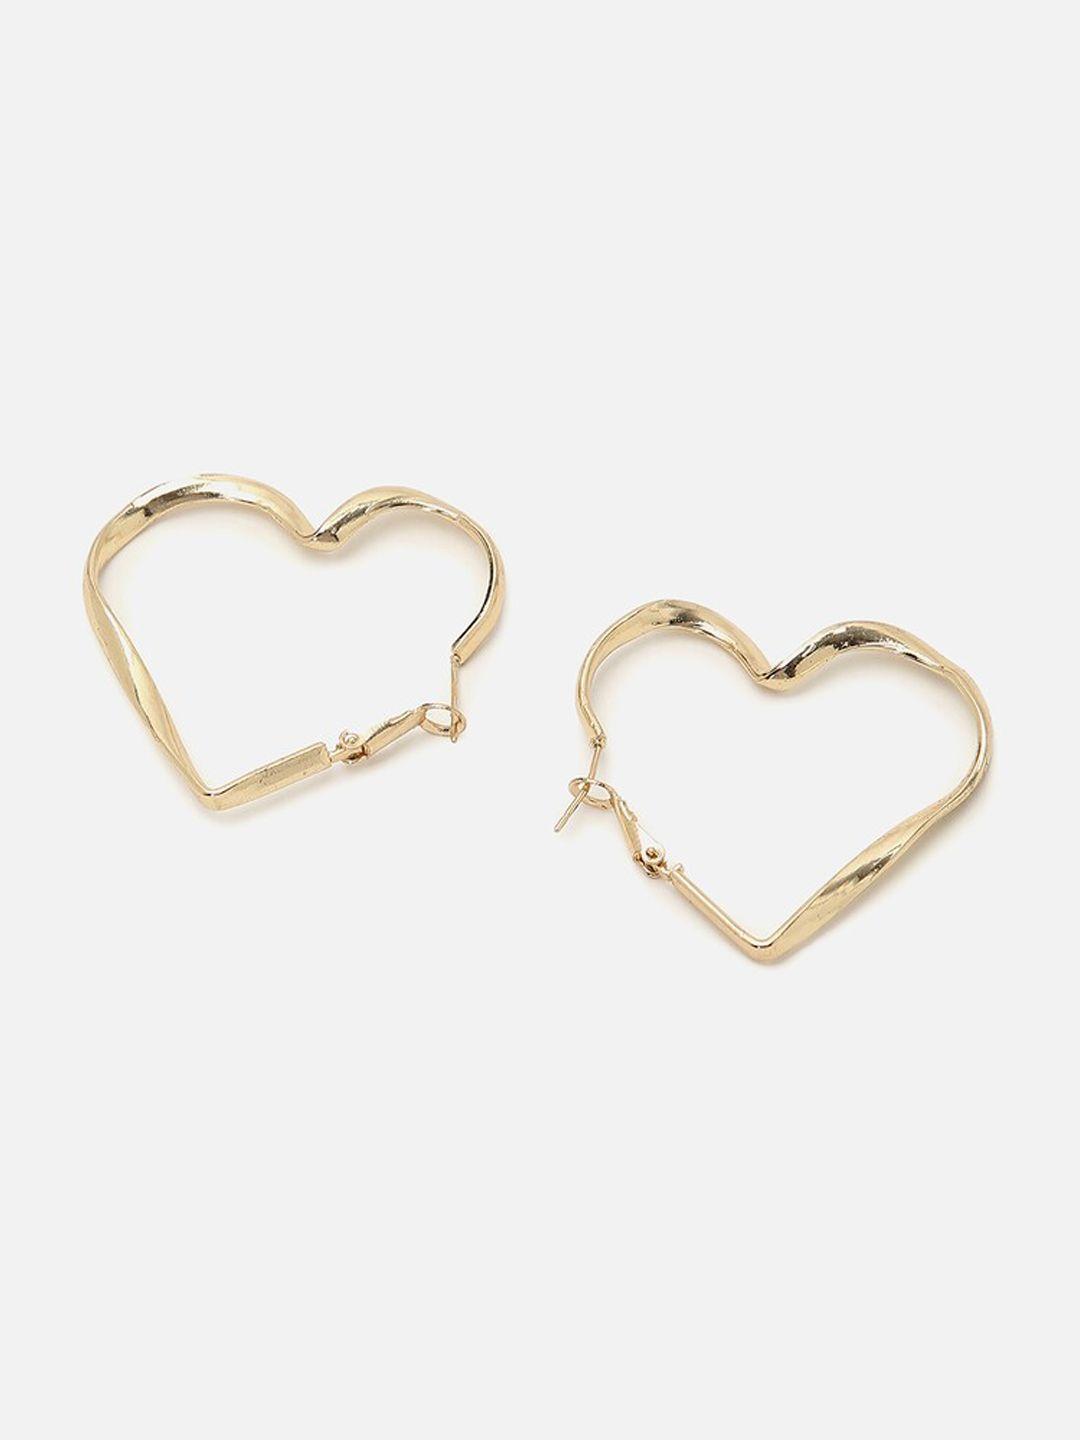 forever-21-gold-plated-heart-shaped-hoop-earrings